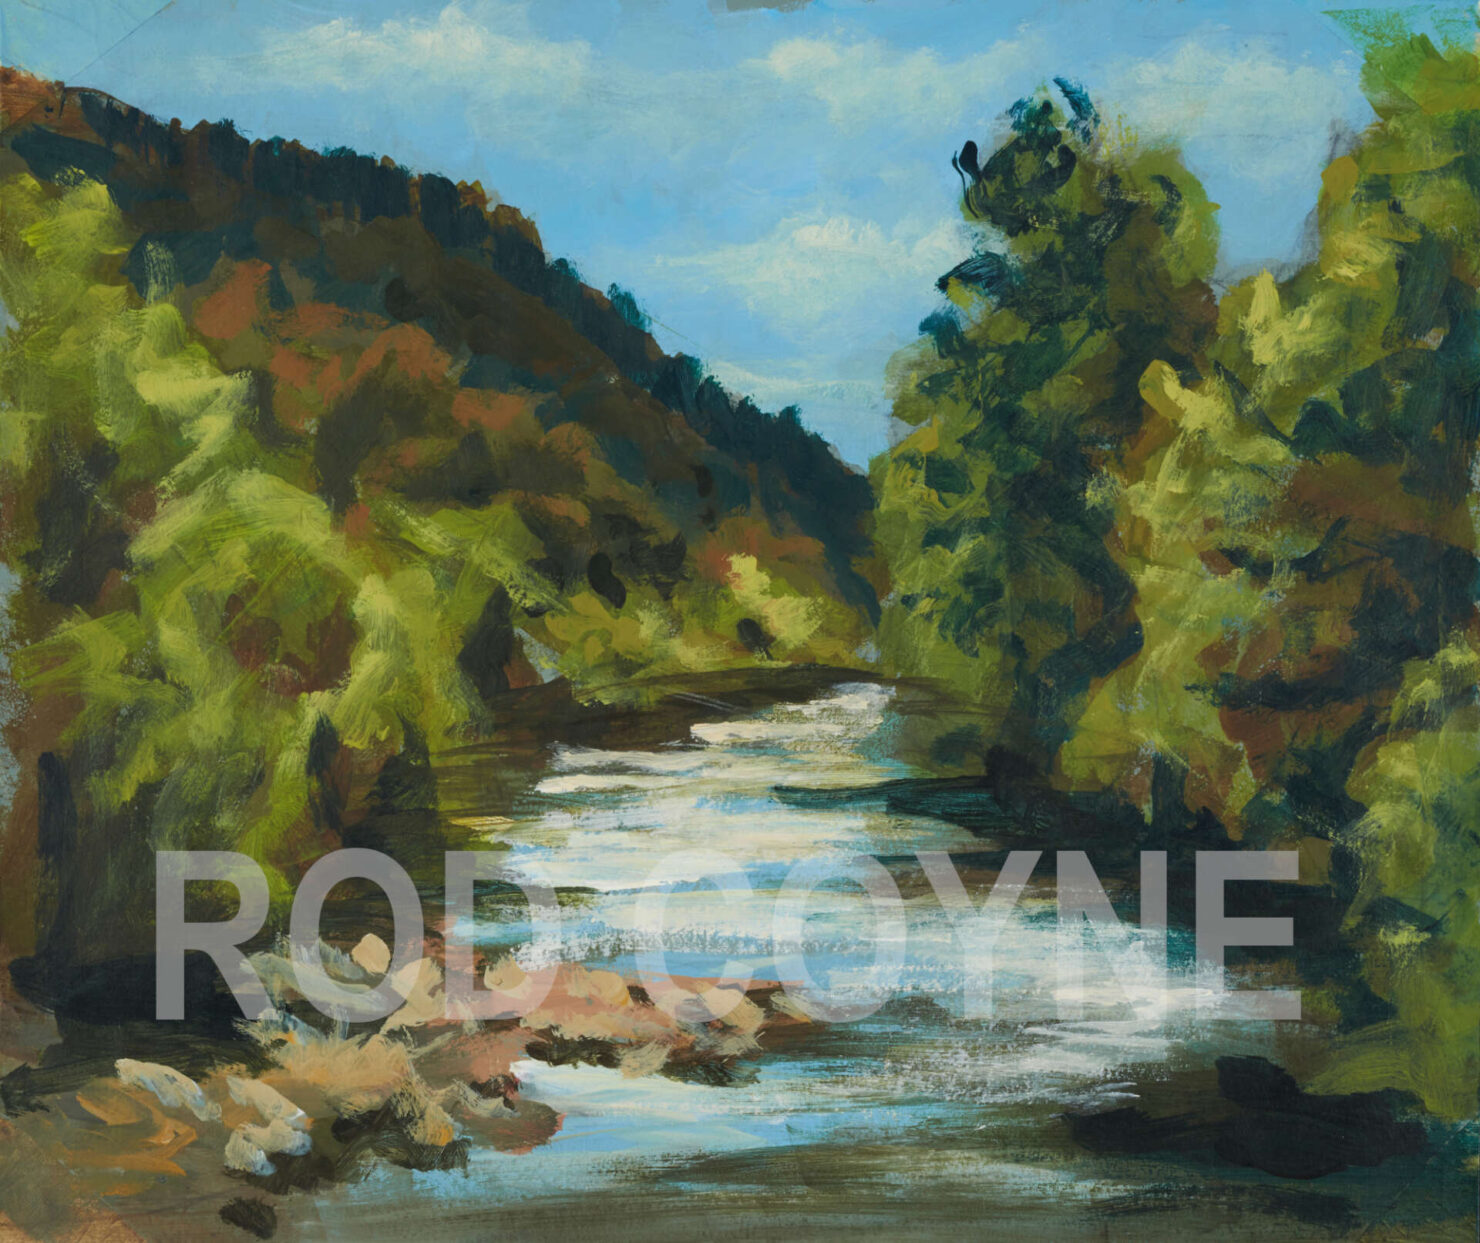 artist rod coyne's painting "meeting of the waters" is shown here, watermarked.